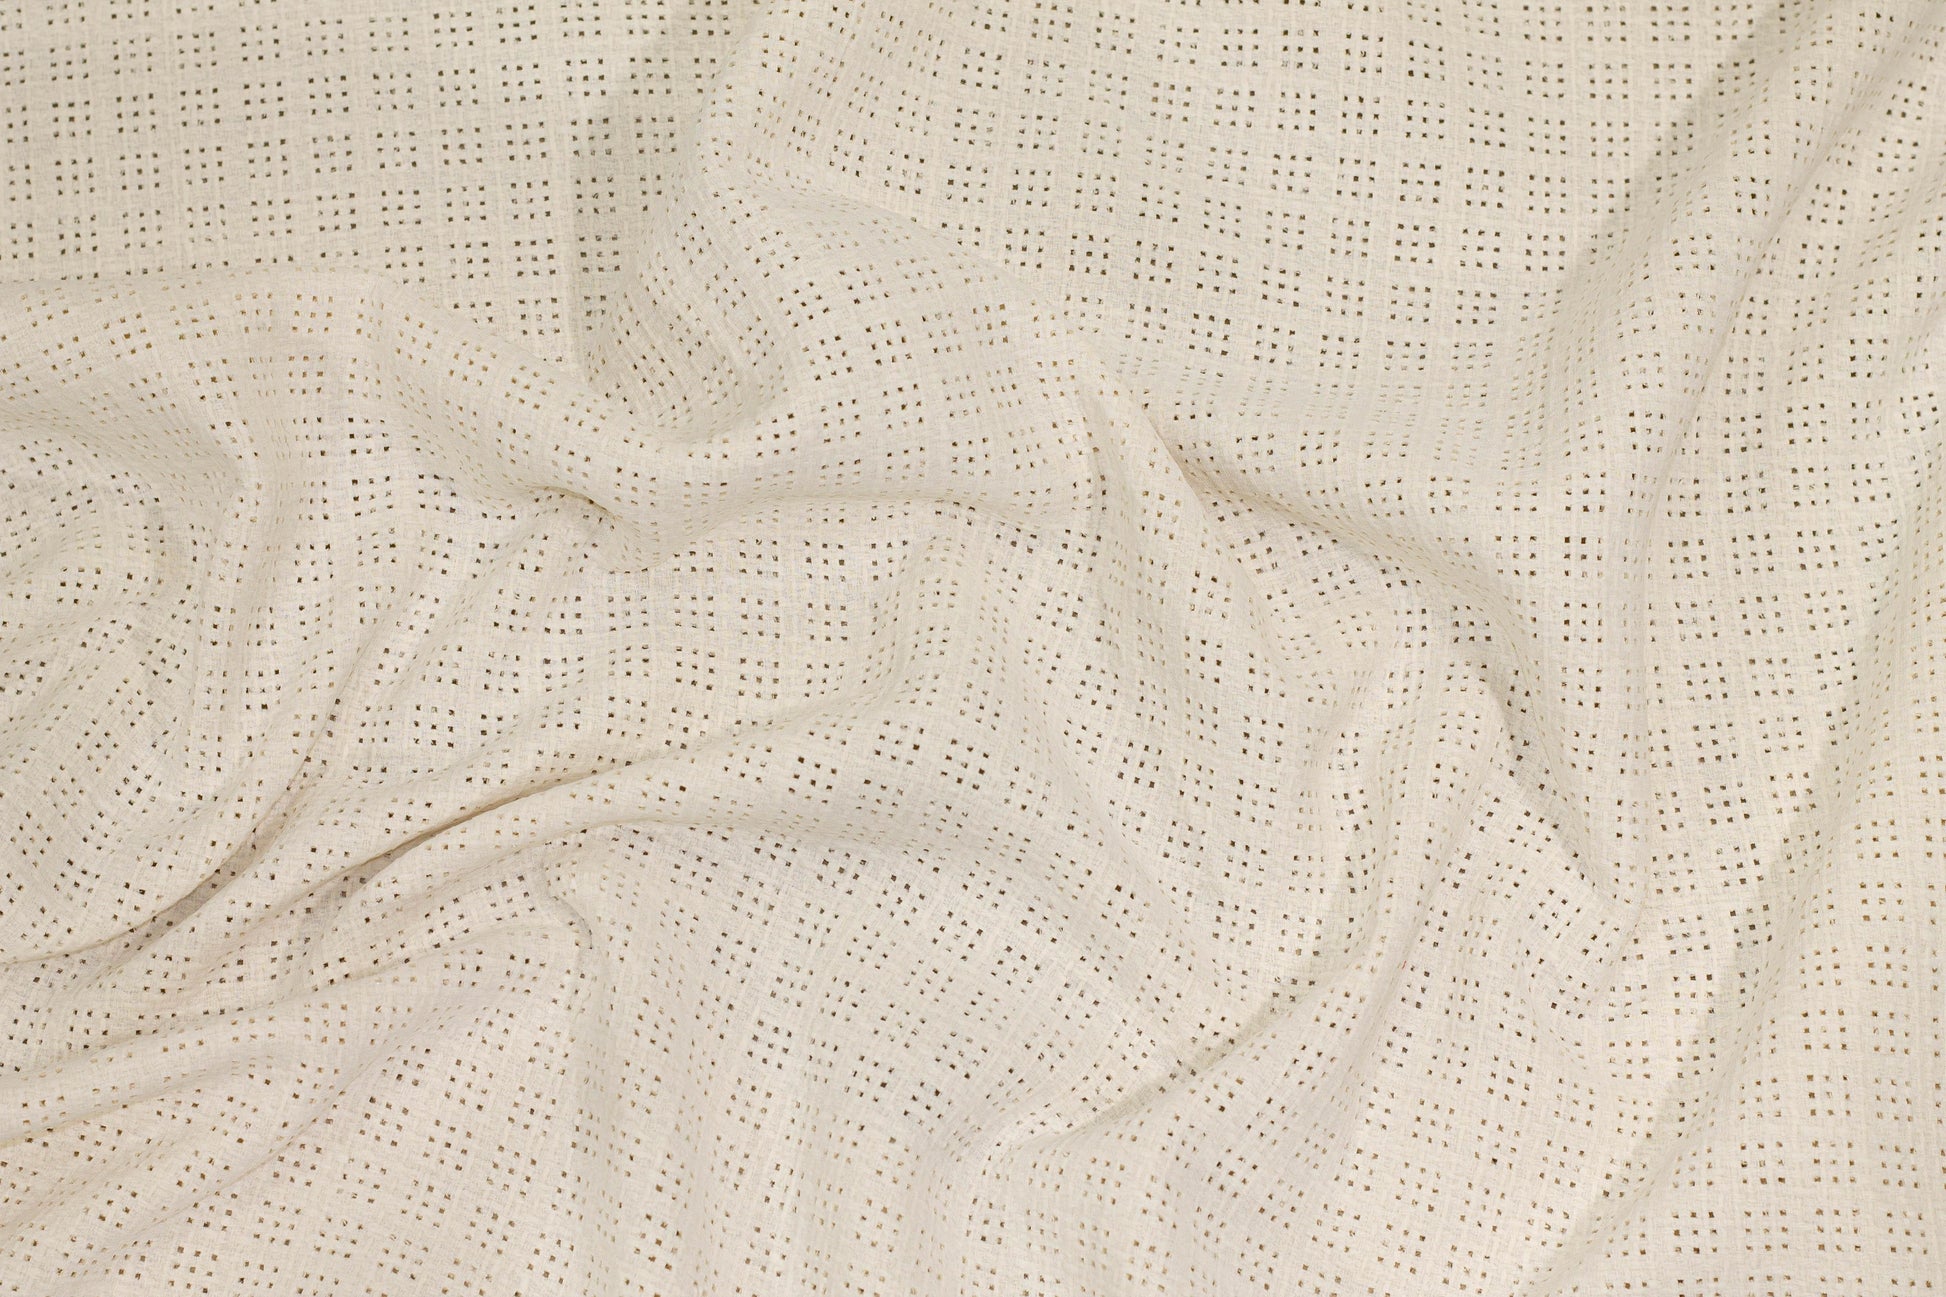 Off White Italian Cotton and Linen Blend Eyelet Boucle - Prime Fabrics